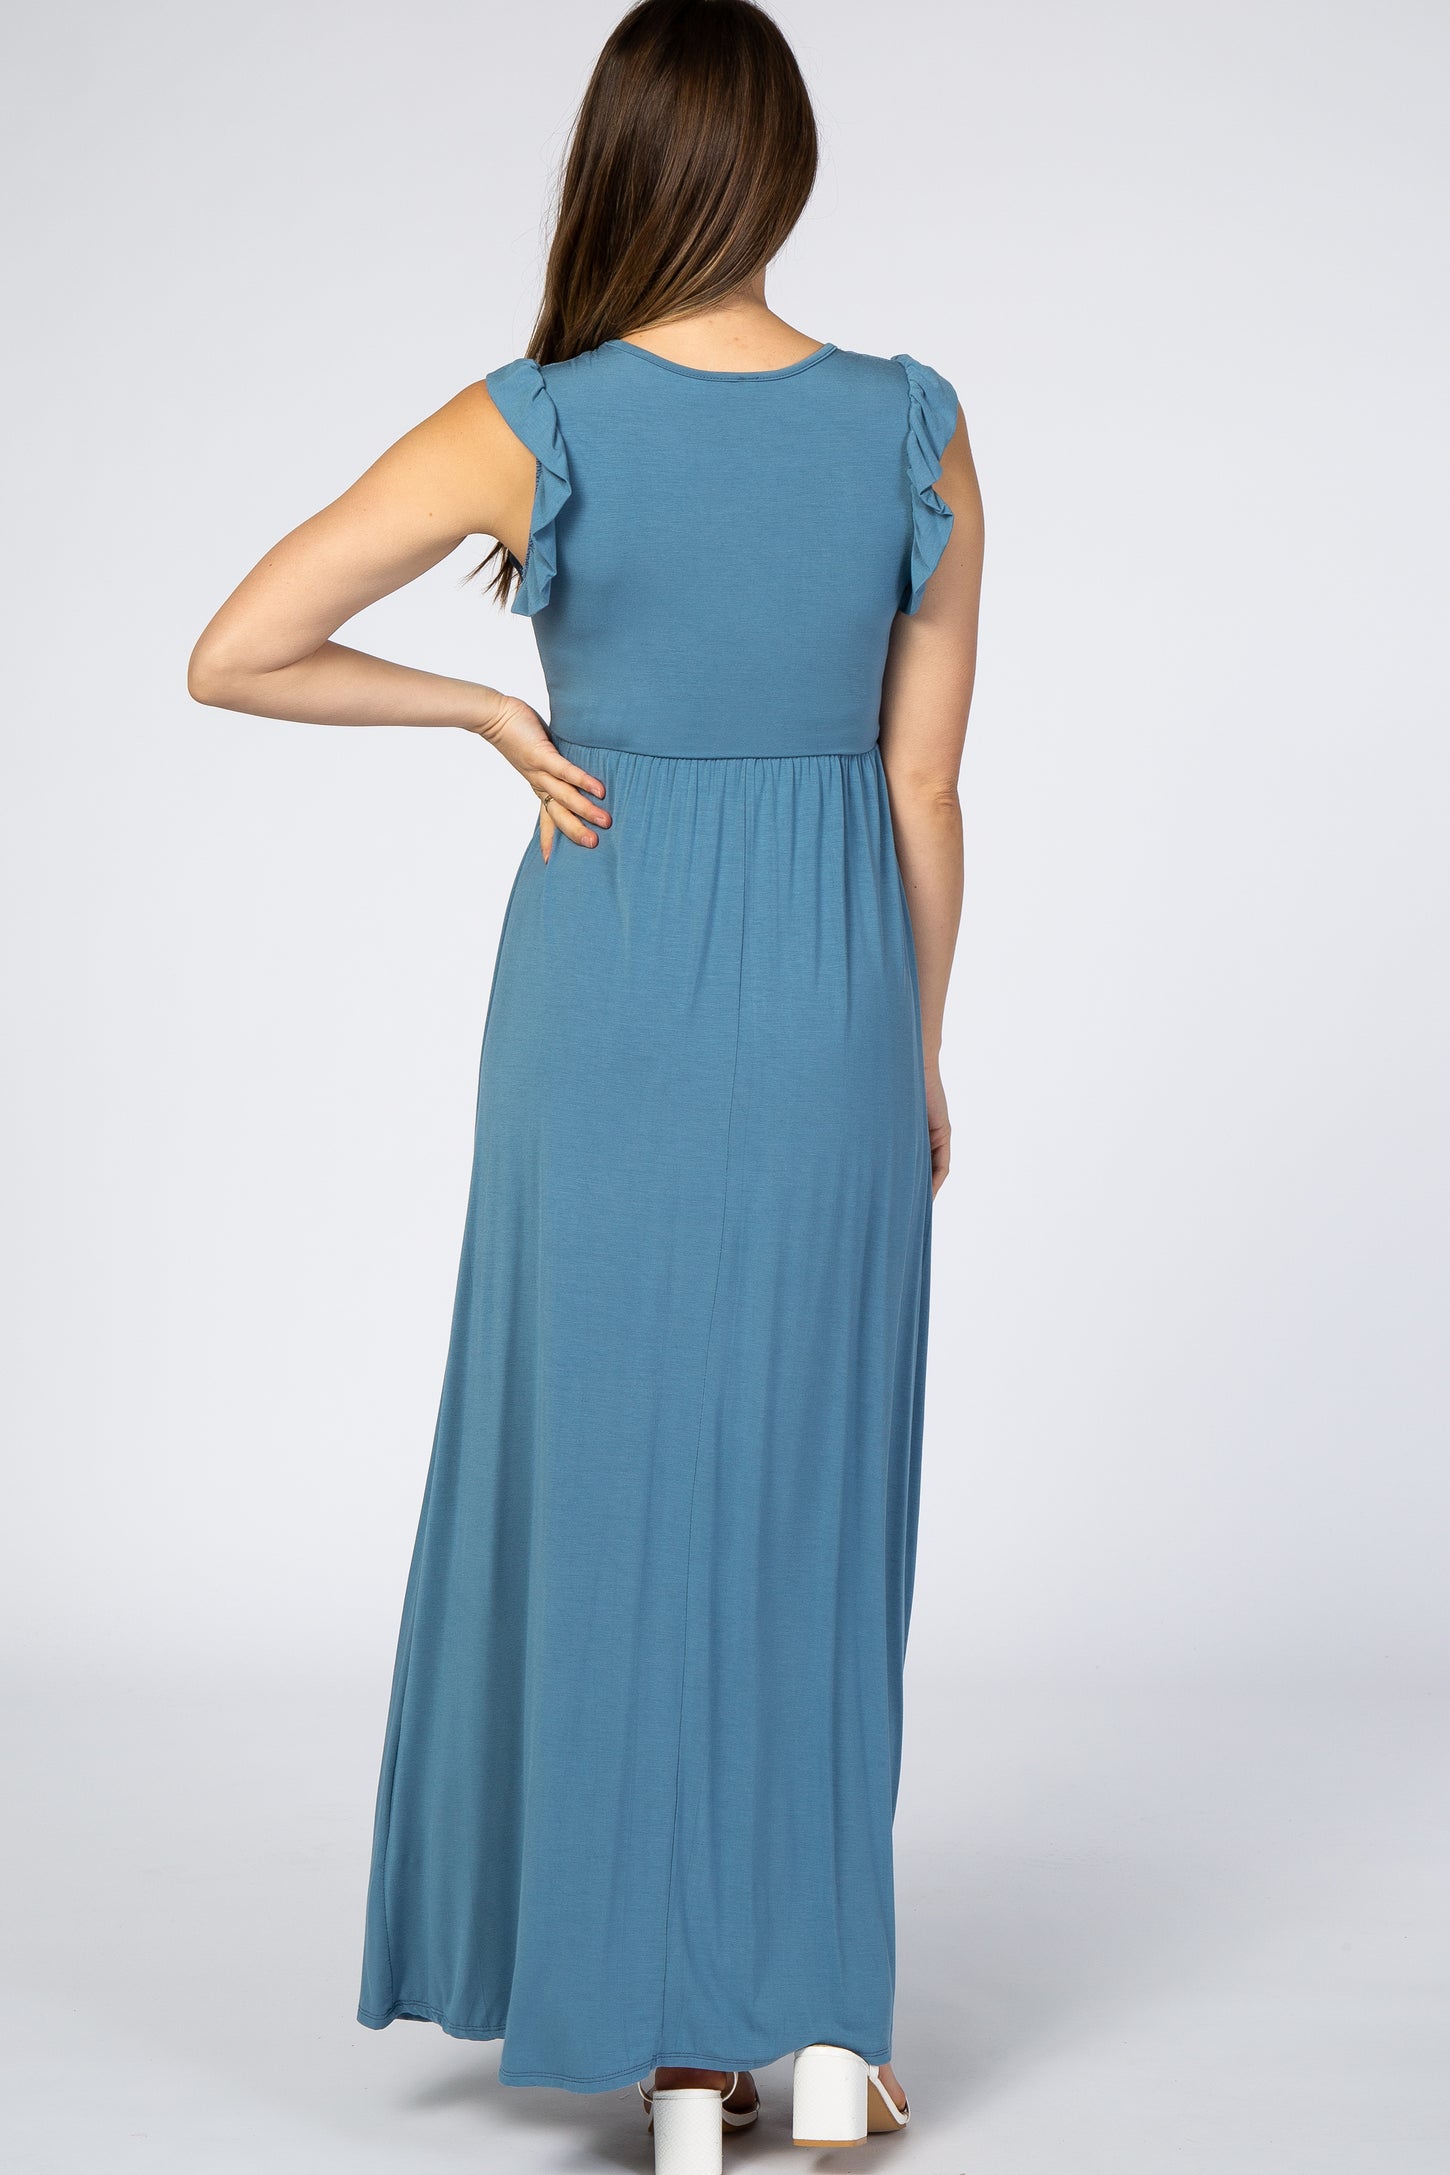 Blue Ruffle Sleeve Maternity Maxi Dress